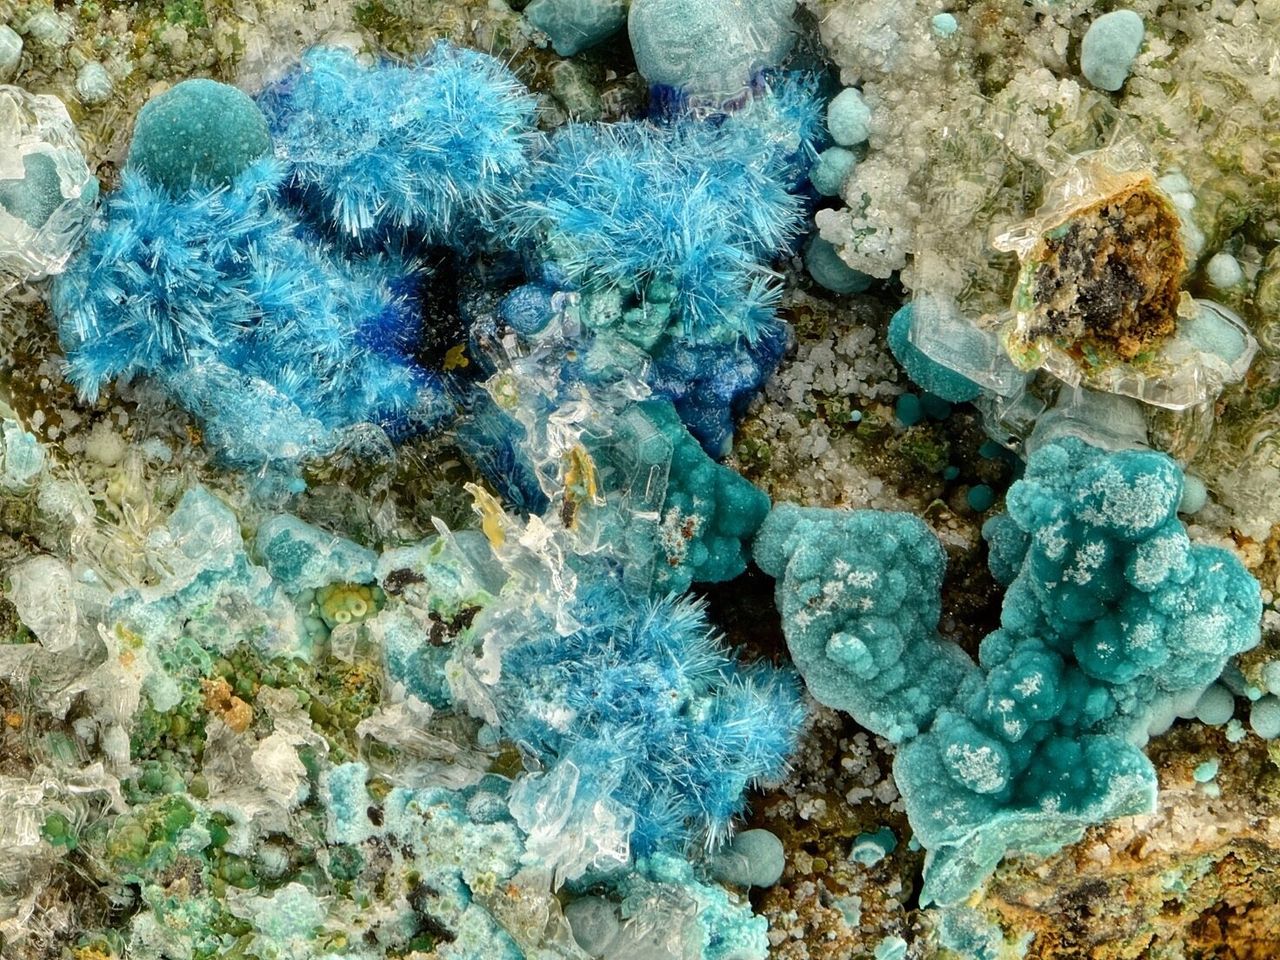 Bελόνες από γαλάζιο σερπιερίτη , μπλε αζουρίτης, πρασινωπός βοτρυοειδής ροζασίτης και διαφανείς κρύσταλλοι γύψου από το ορυχείο «Χριστιάνα». FOV: 13 mm. Φωτ. Branko Rieck.